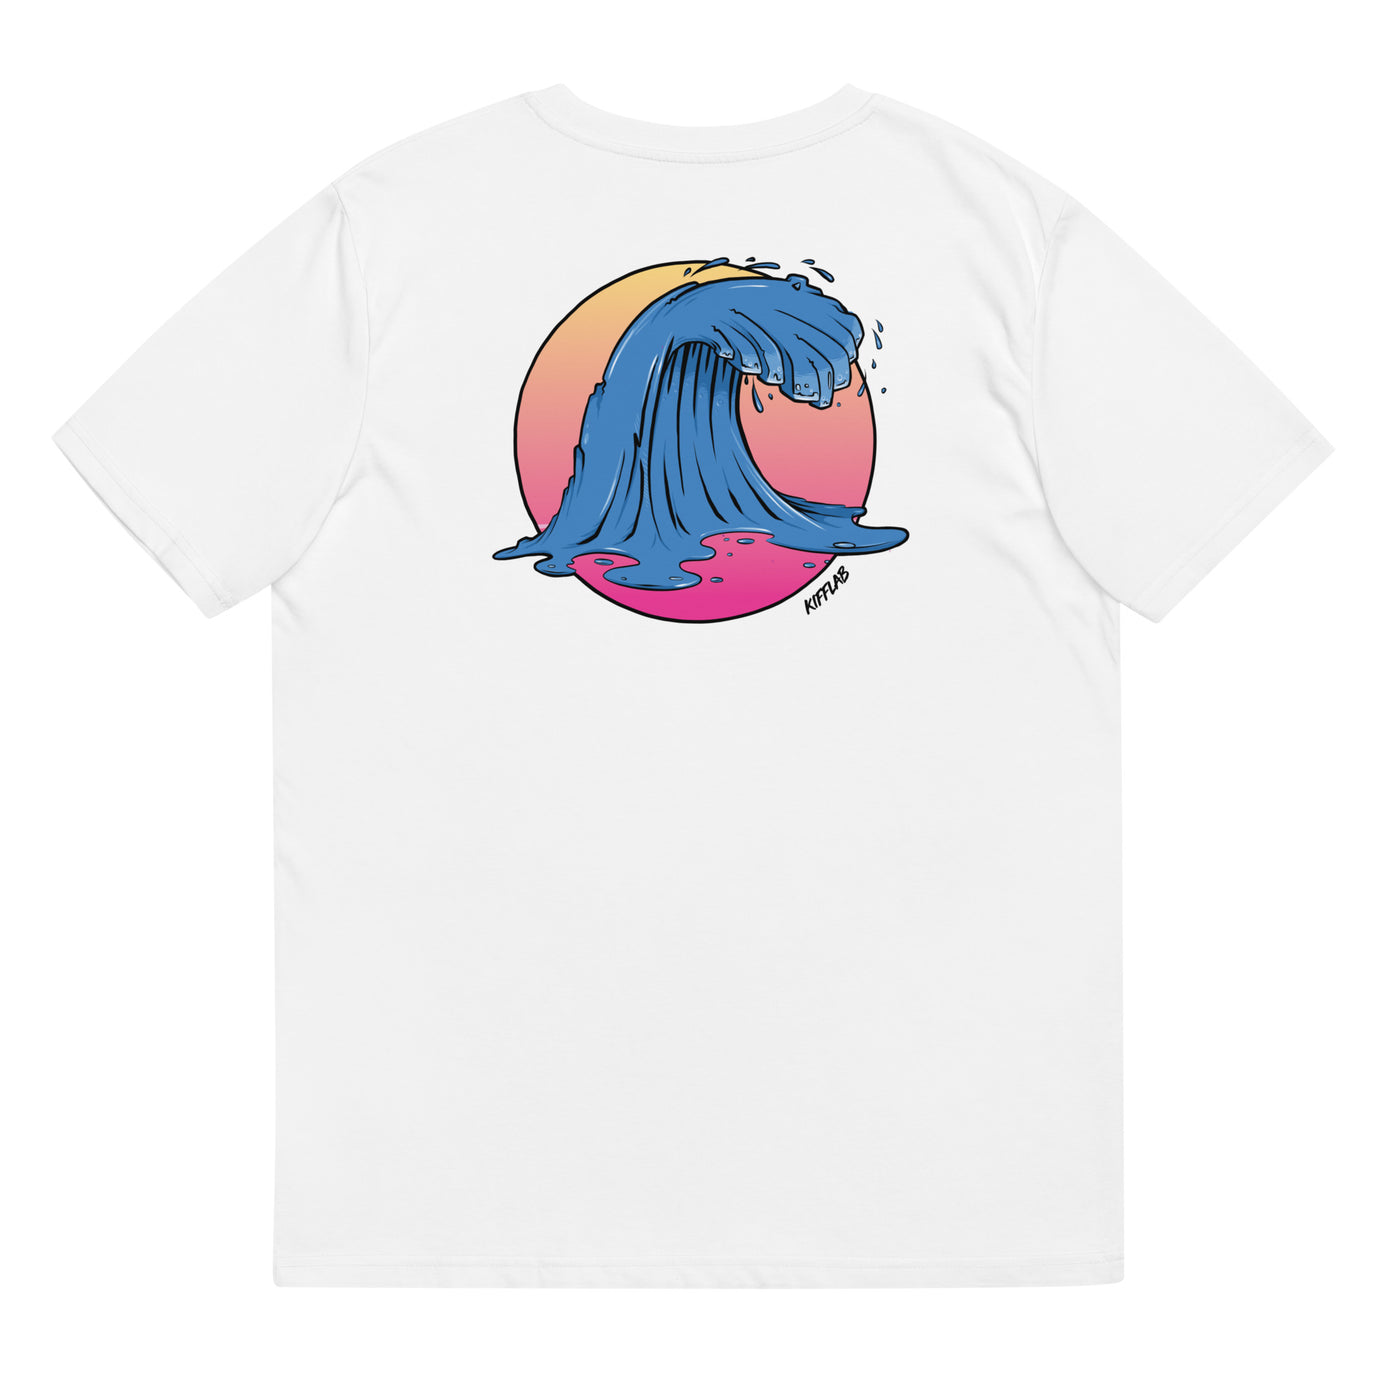 Kifflab wave shirt